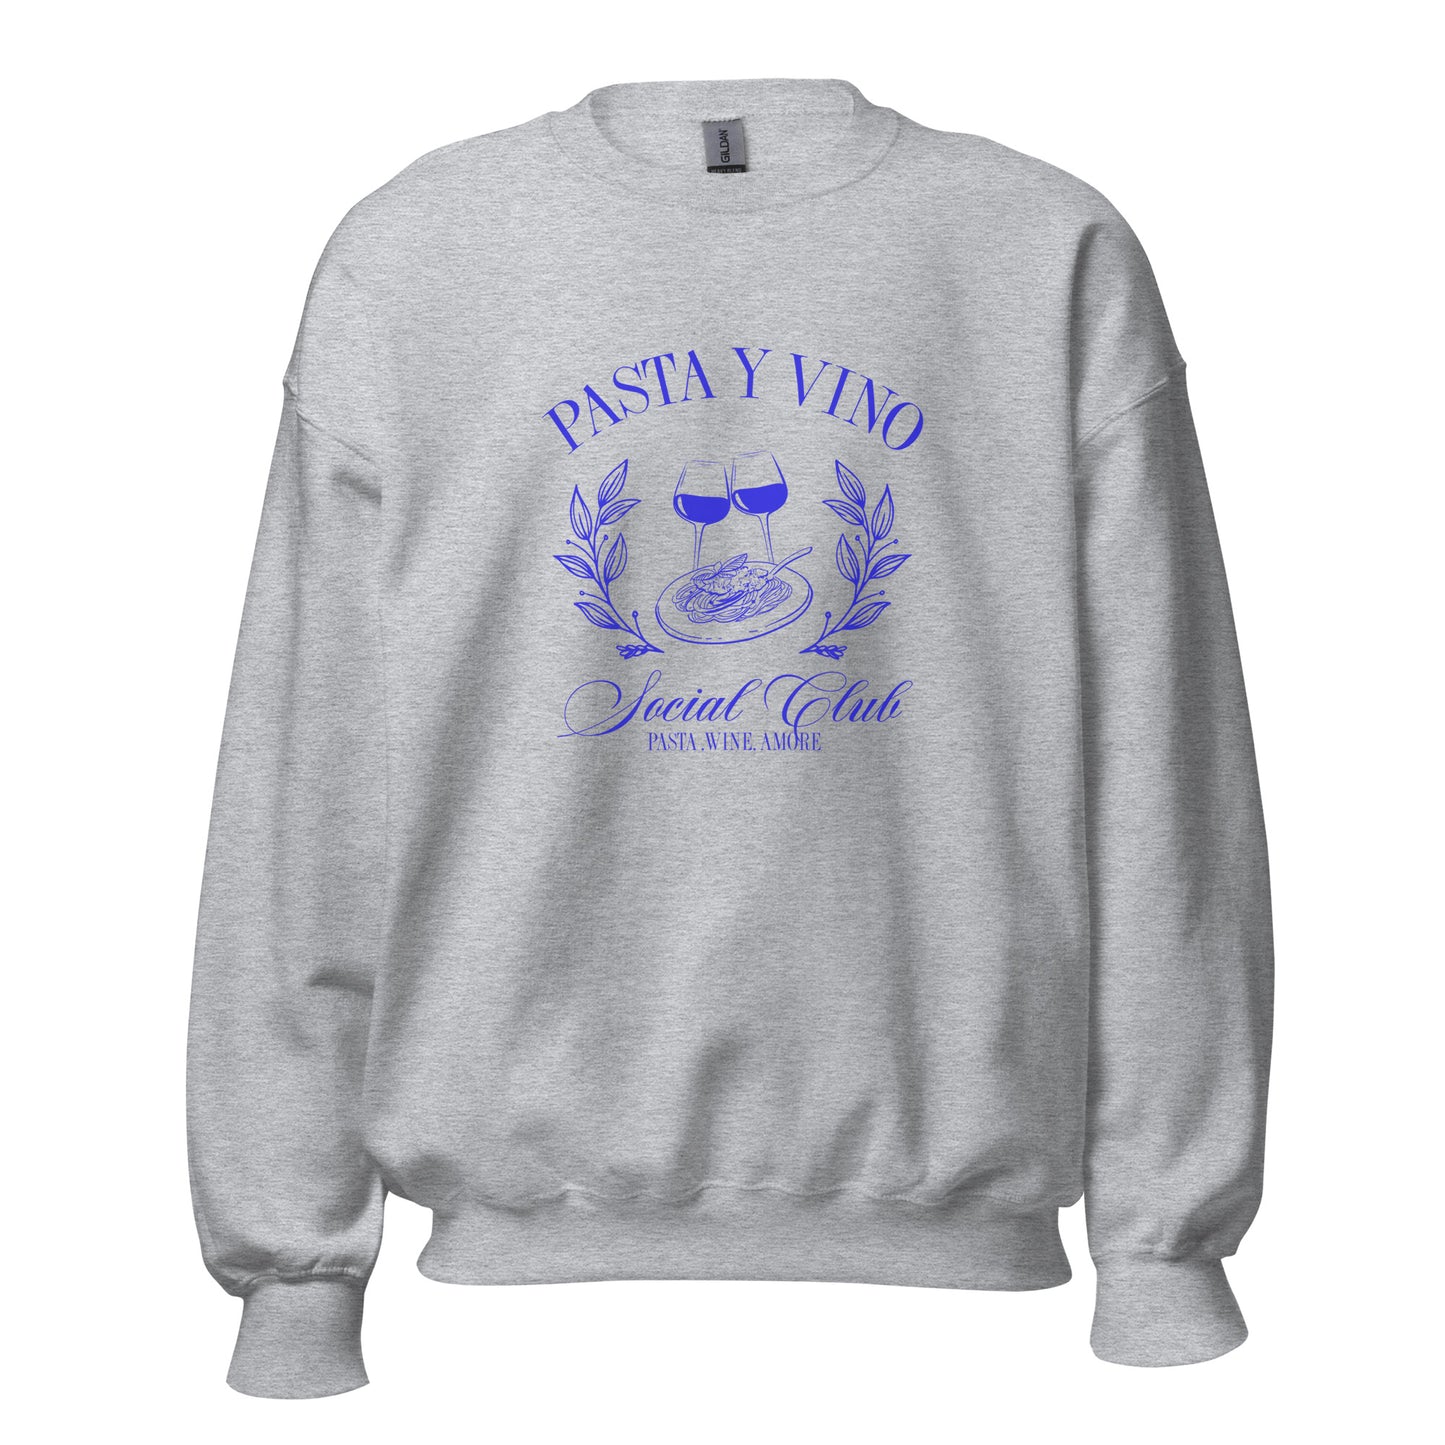 Pasta Y Vino Social Club Sweatshirt